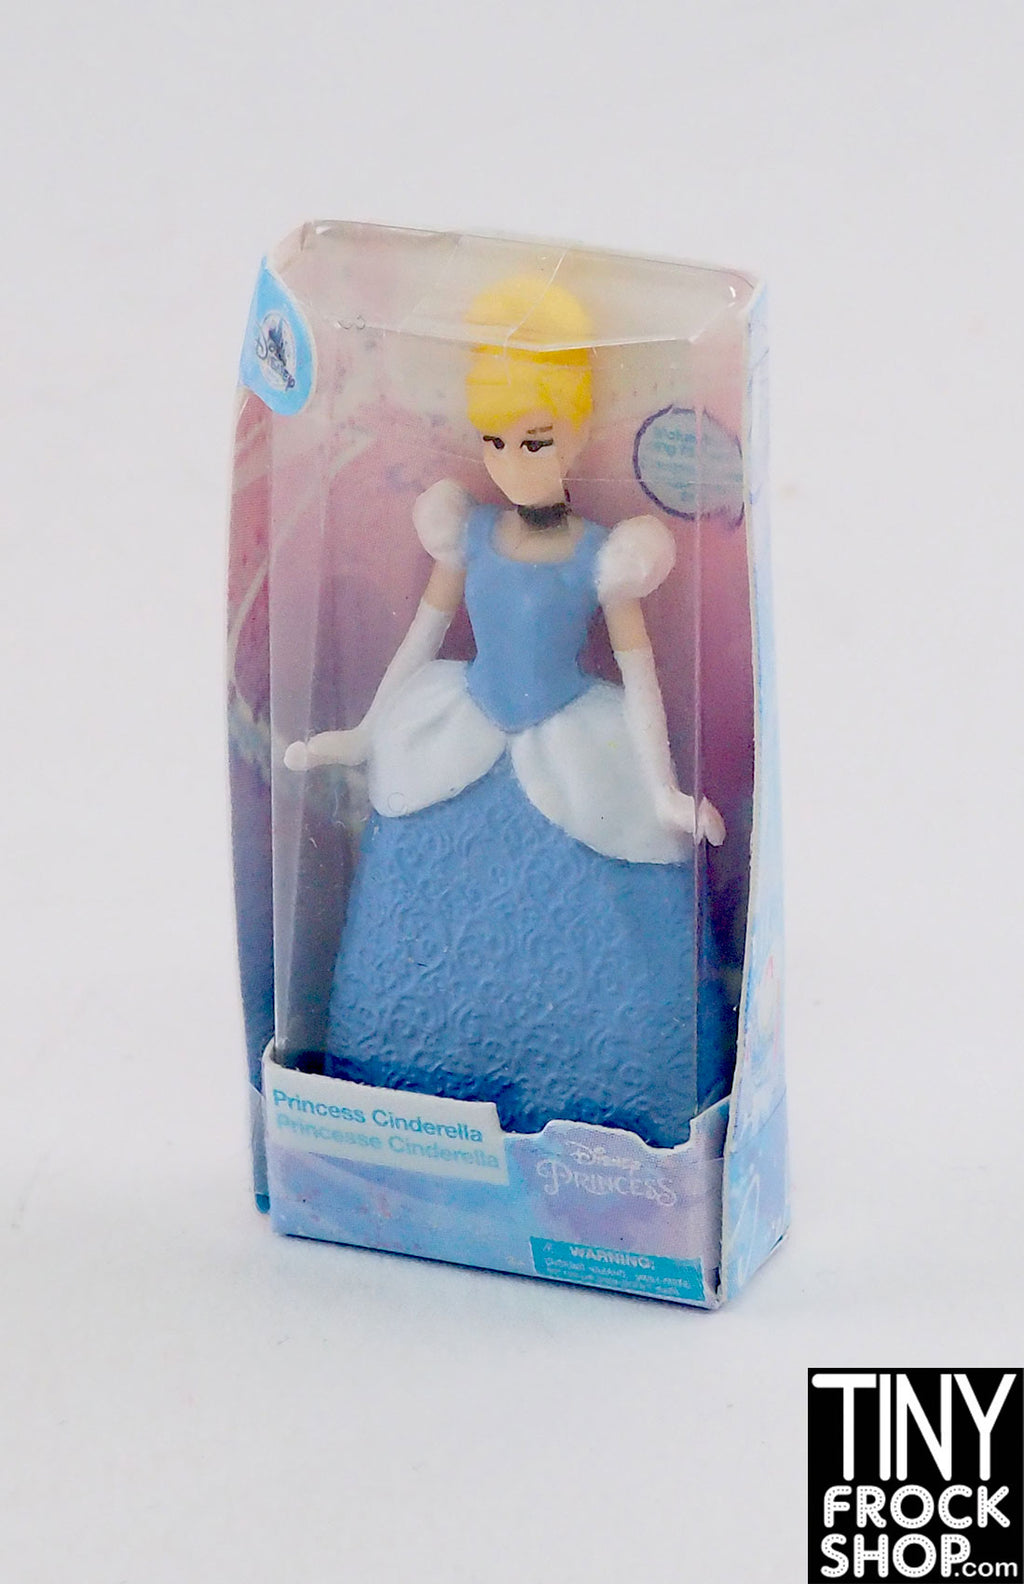 Disney Princess Mini Dolls